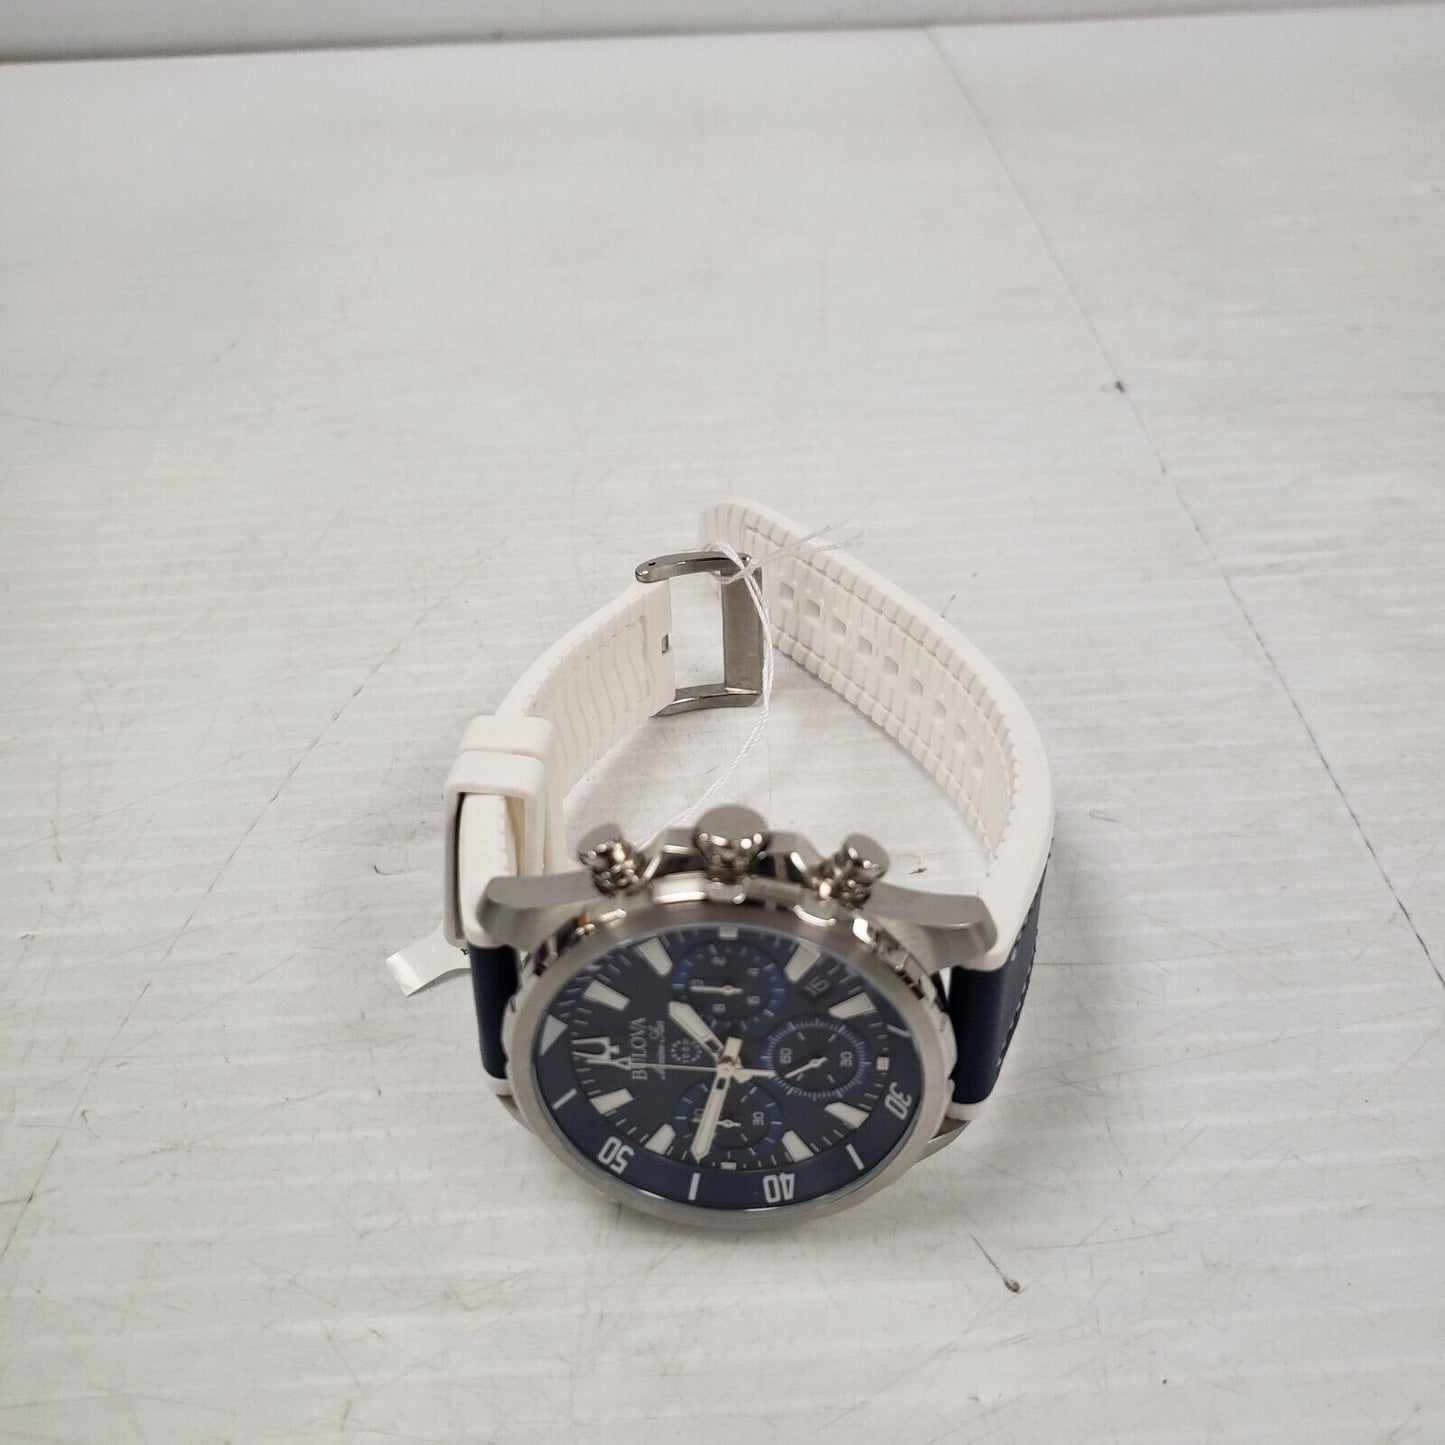 (55291-1) Bulova Marine Star 96B287 Watch